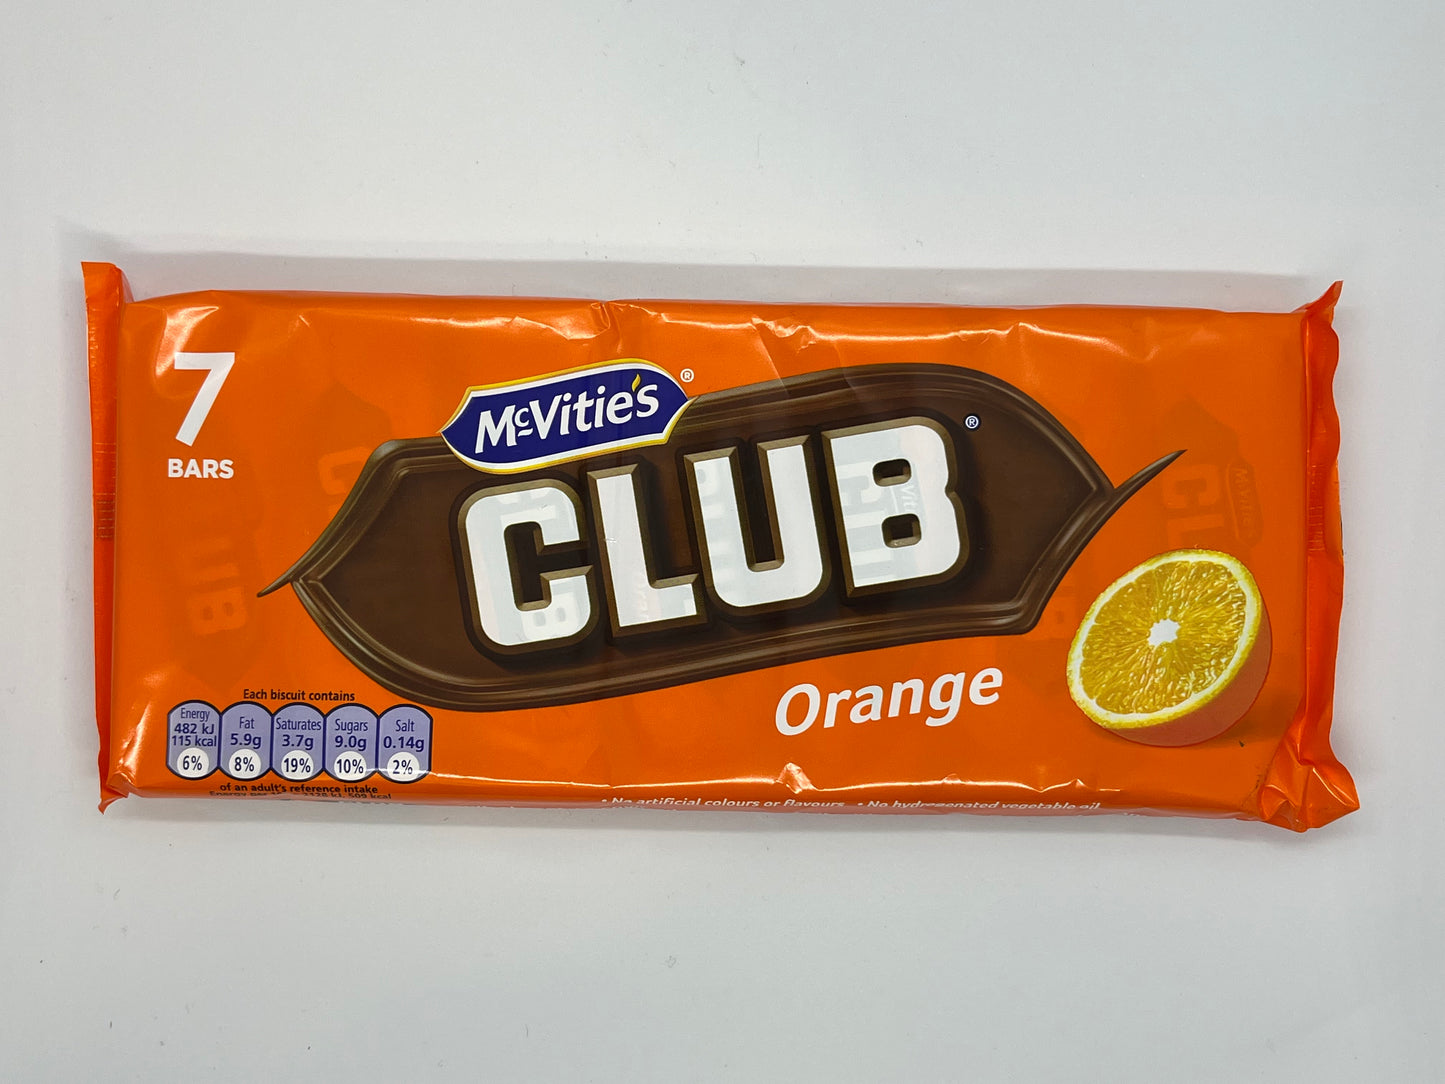 McVitie’s Club Orange 7 Bars 154g